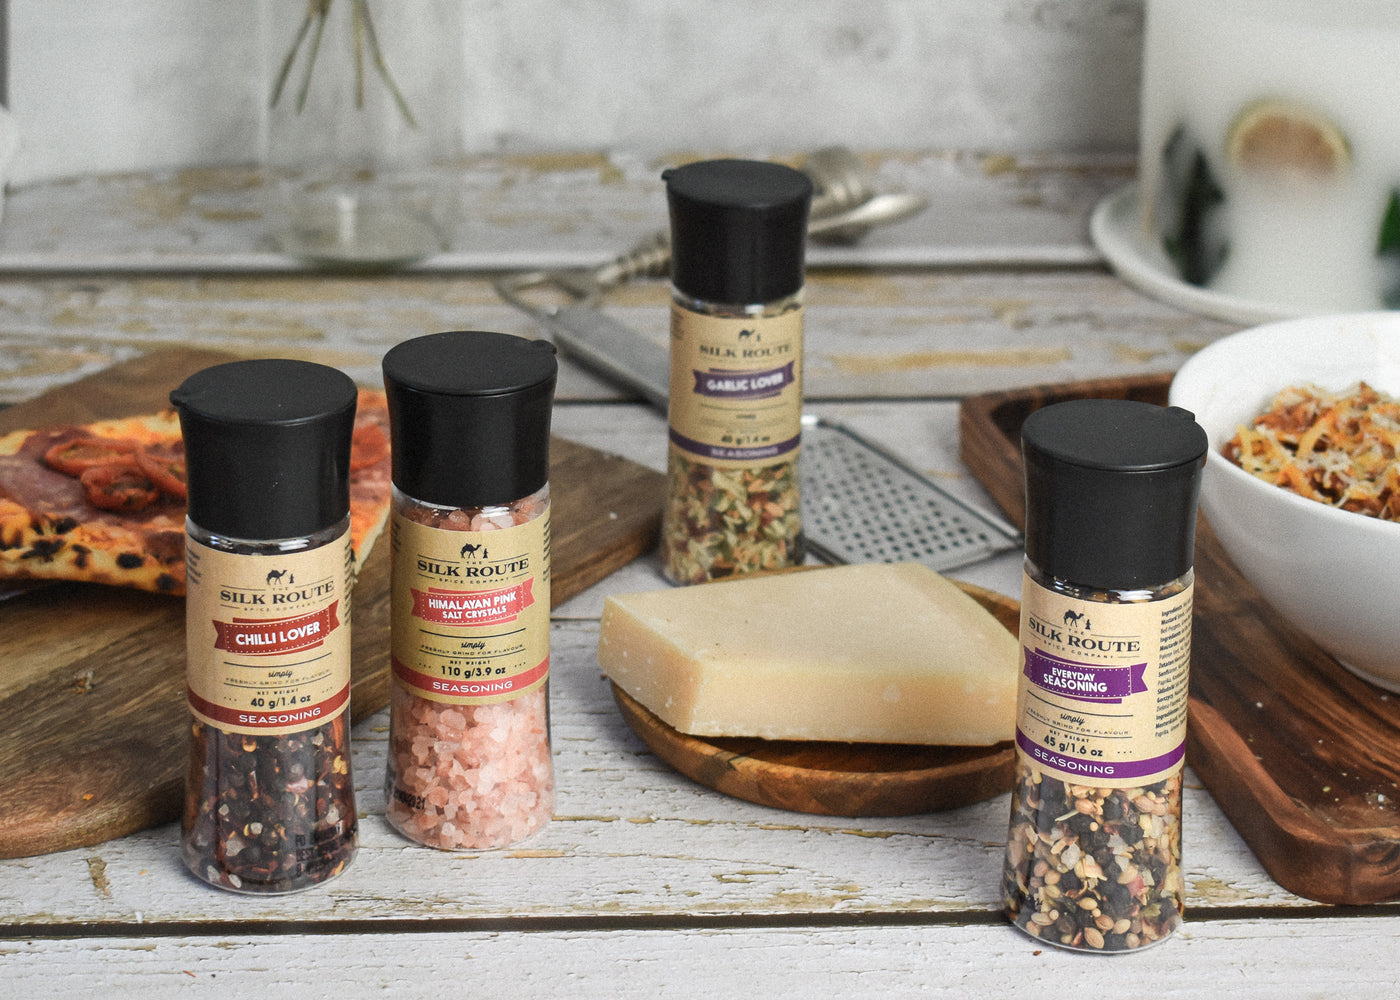 Spice Grinder Gift Set x 4 (Himalayan Pink Salt, Chilli Lover, Garlic & Herb, Everyday Seasoning)